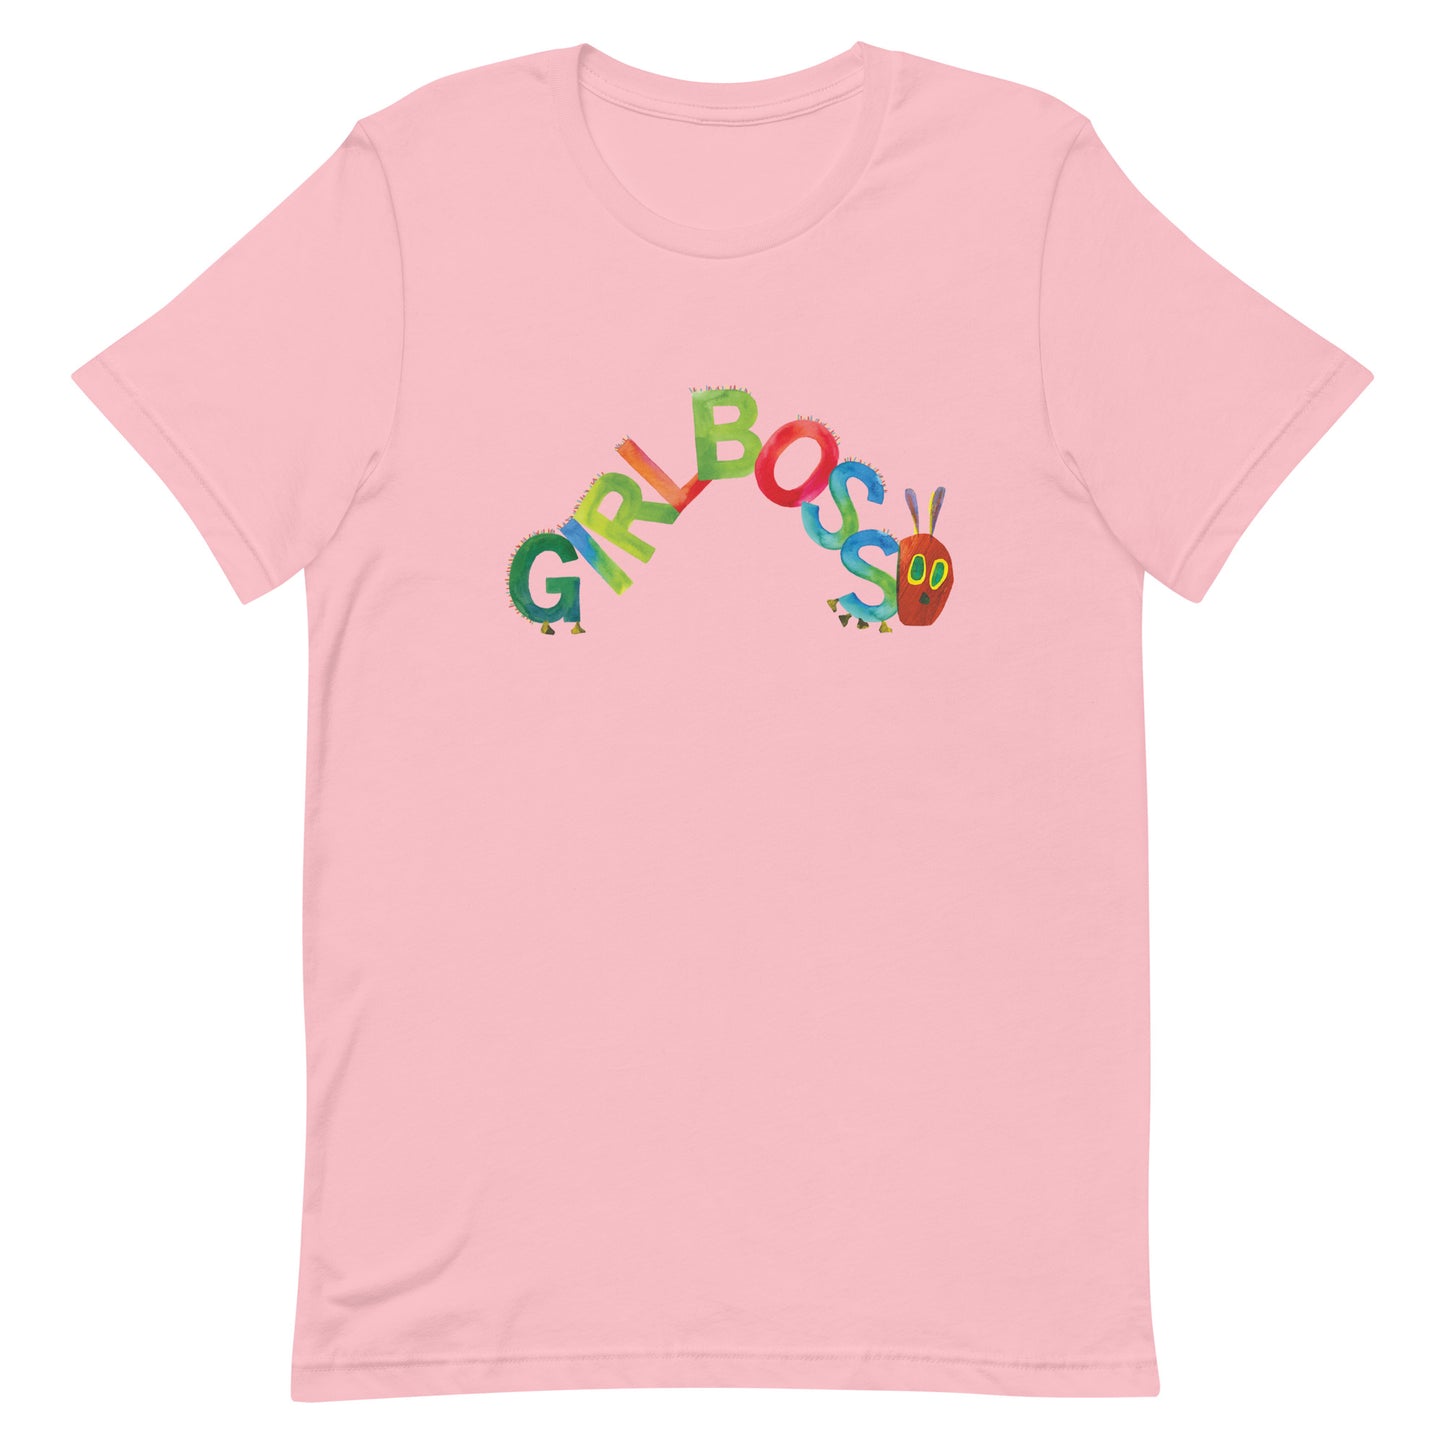 The Very Hungry Girlboss Unisex t-shirt